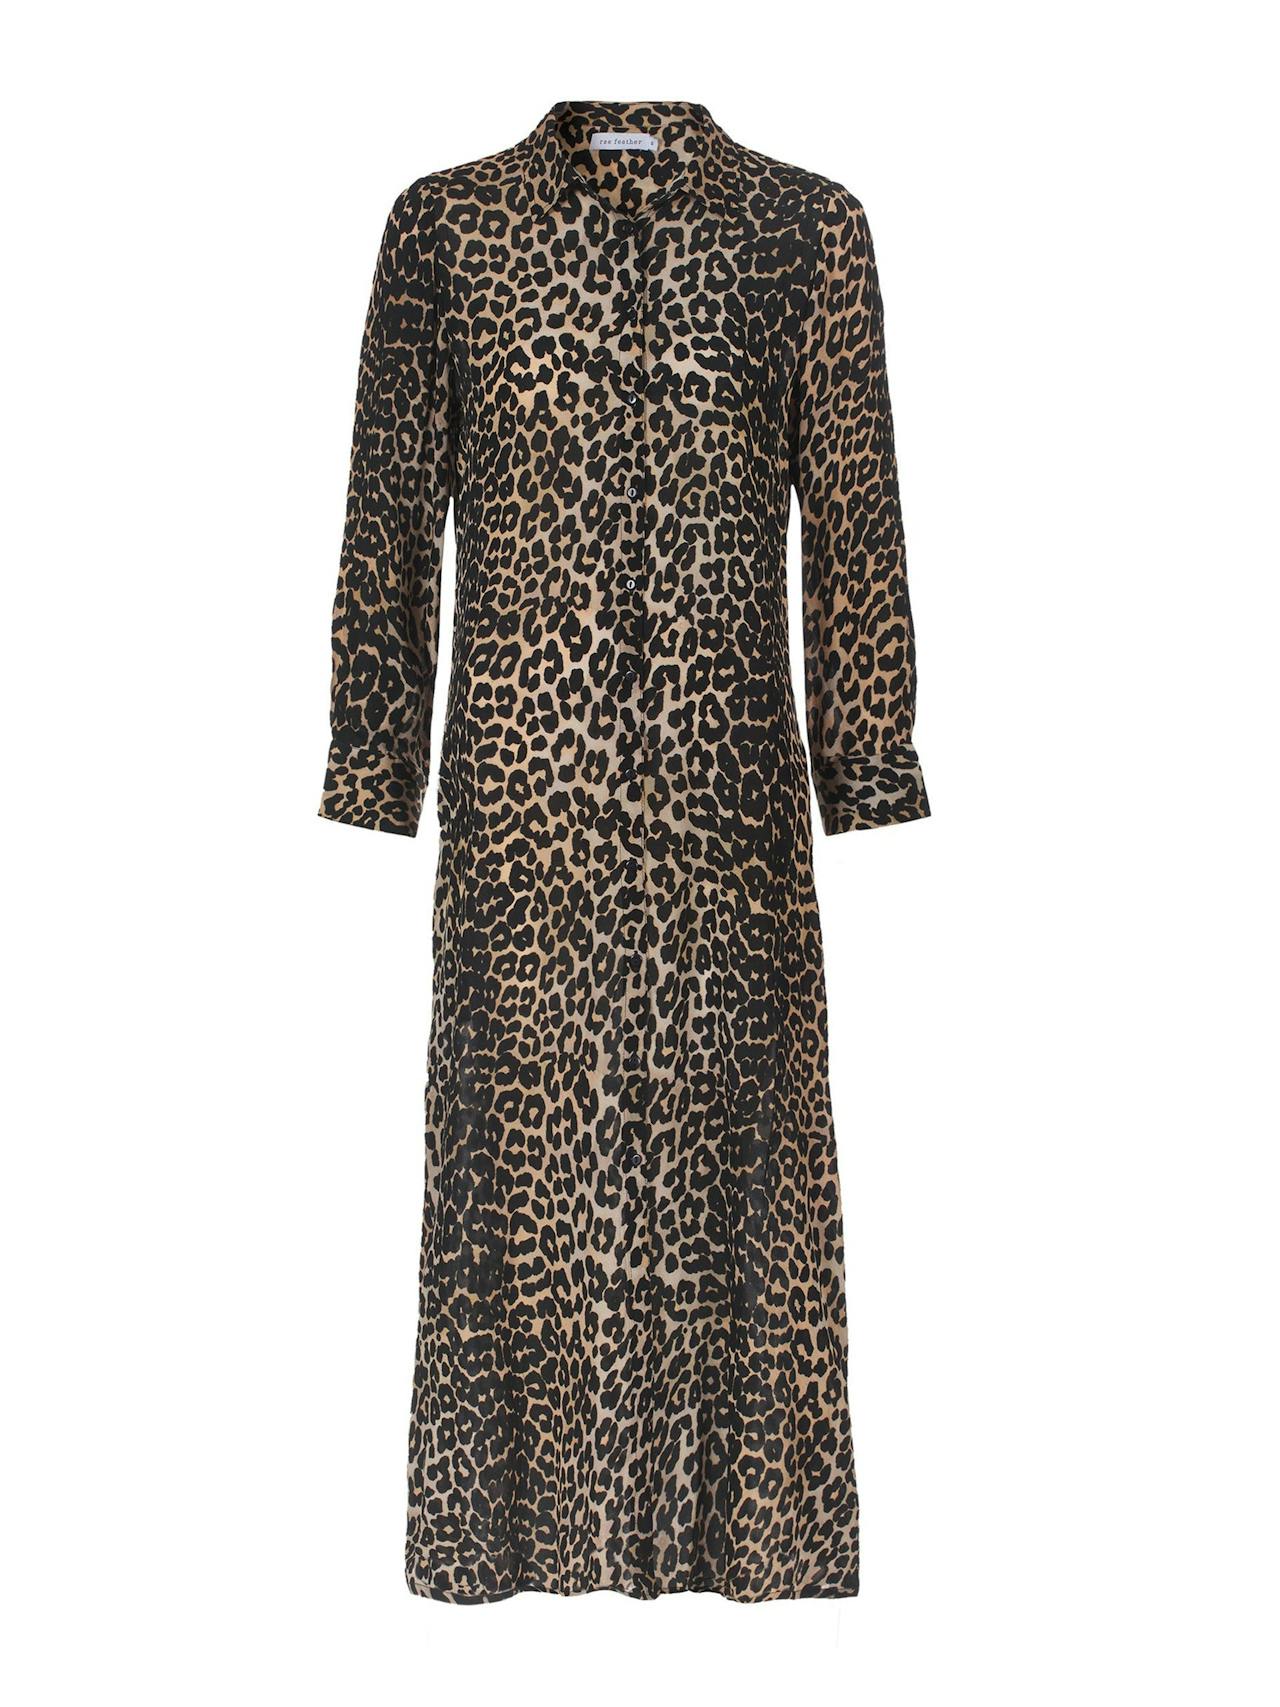 Nicola leopard shirt dress